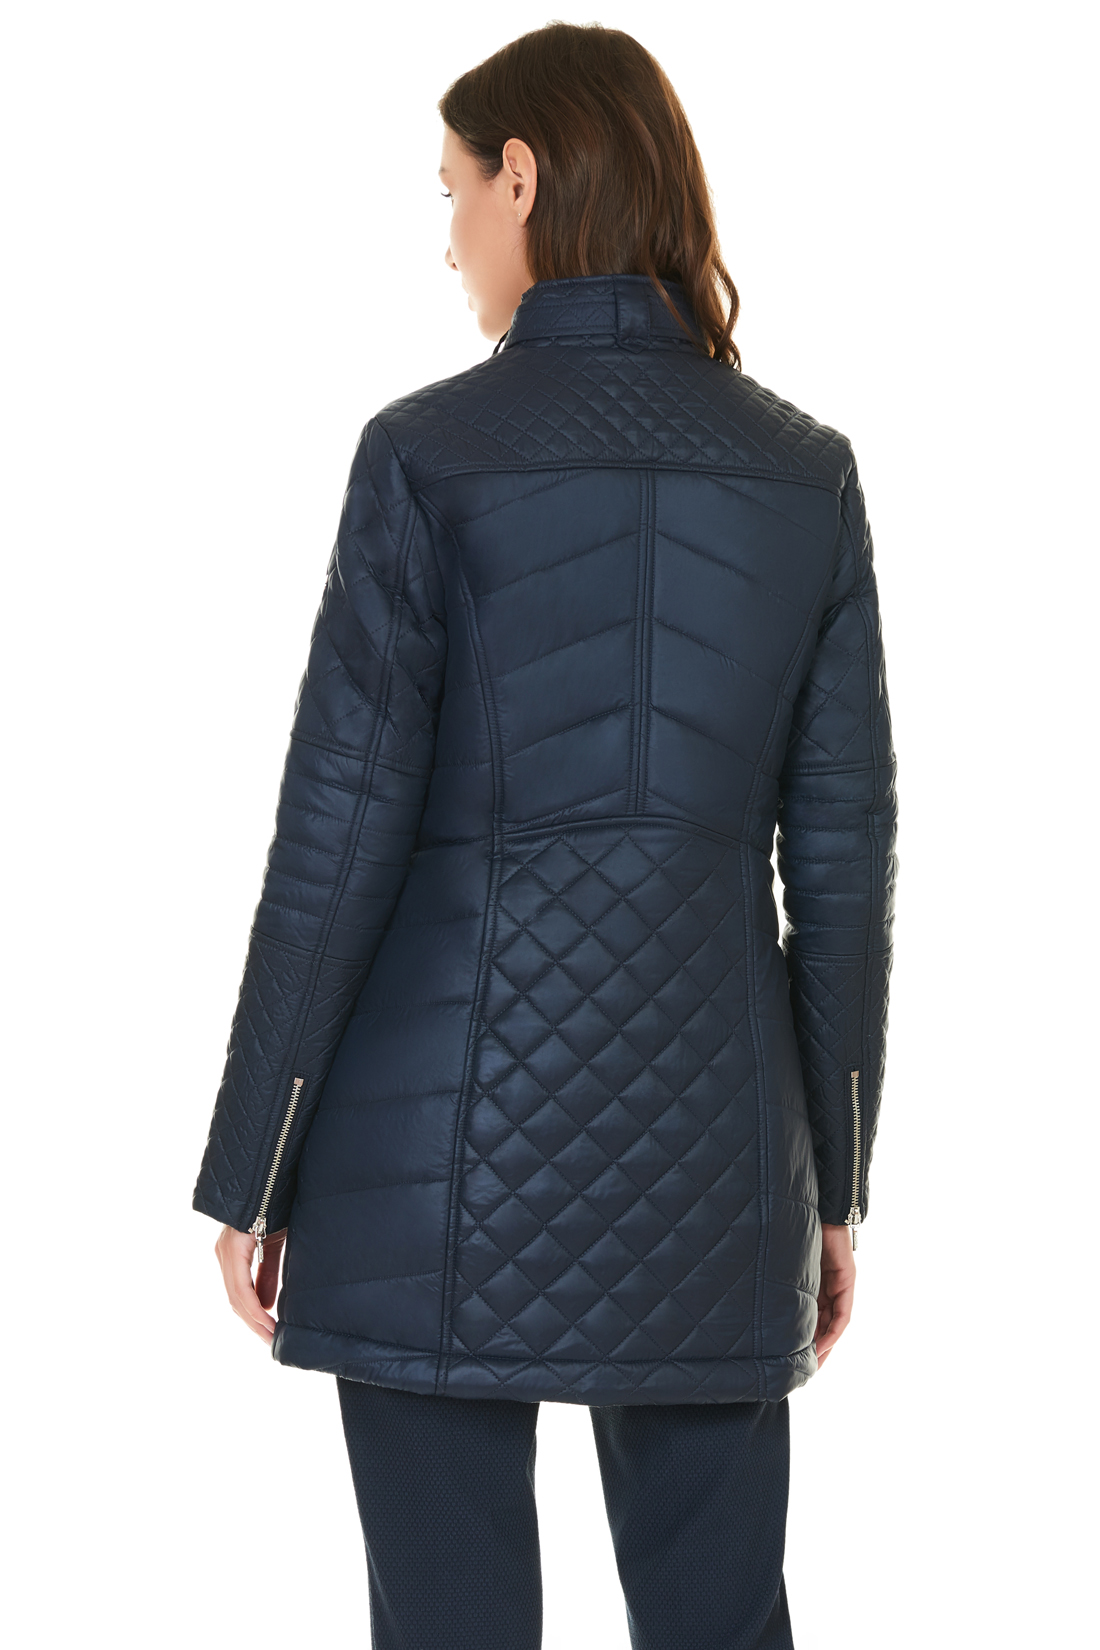 Удлинённая стёганая куртка (арт. baon B037535), размер XL, цвет синий Удлинённая стёганая куртка (арт. baon B037535) - фото 2